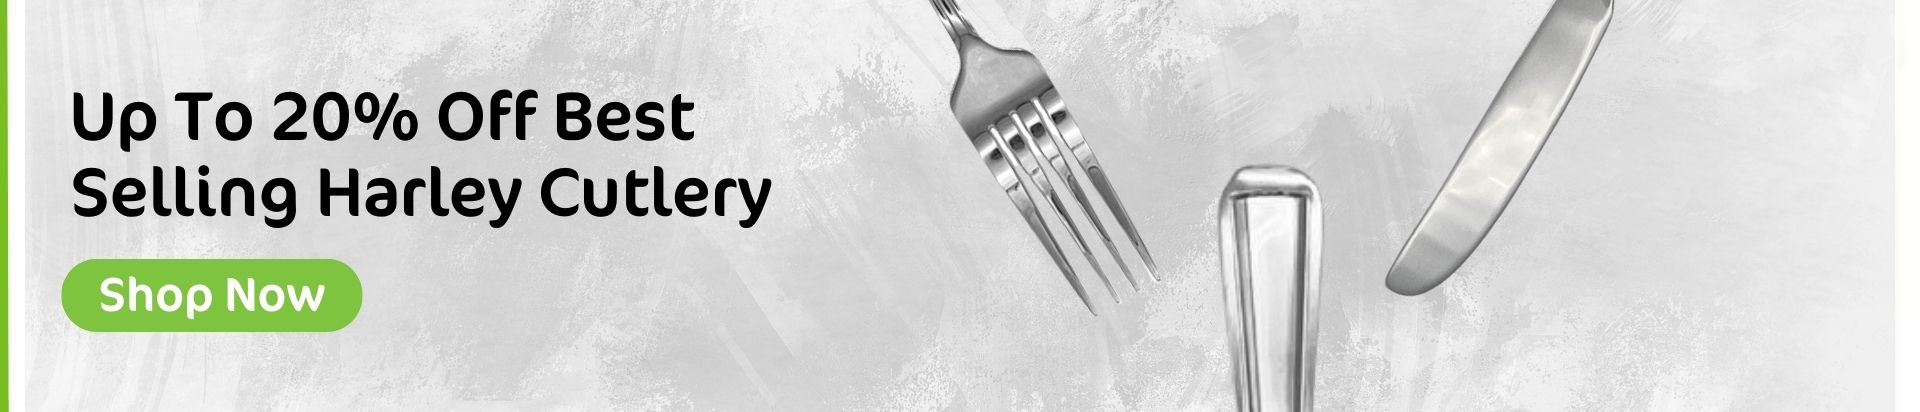 Cutlery Offer